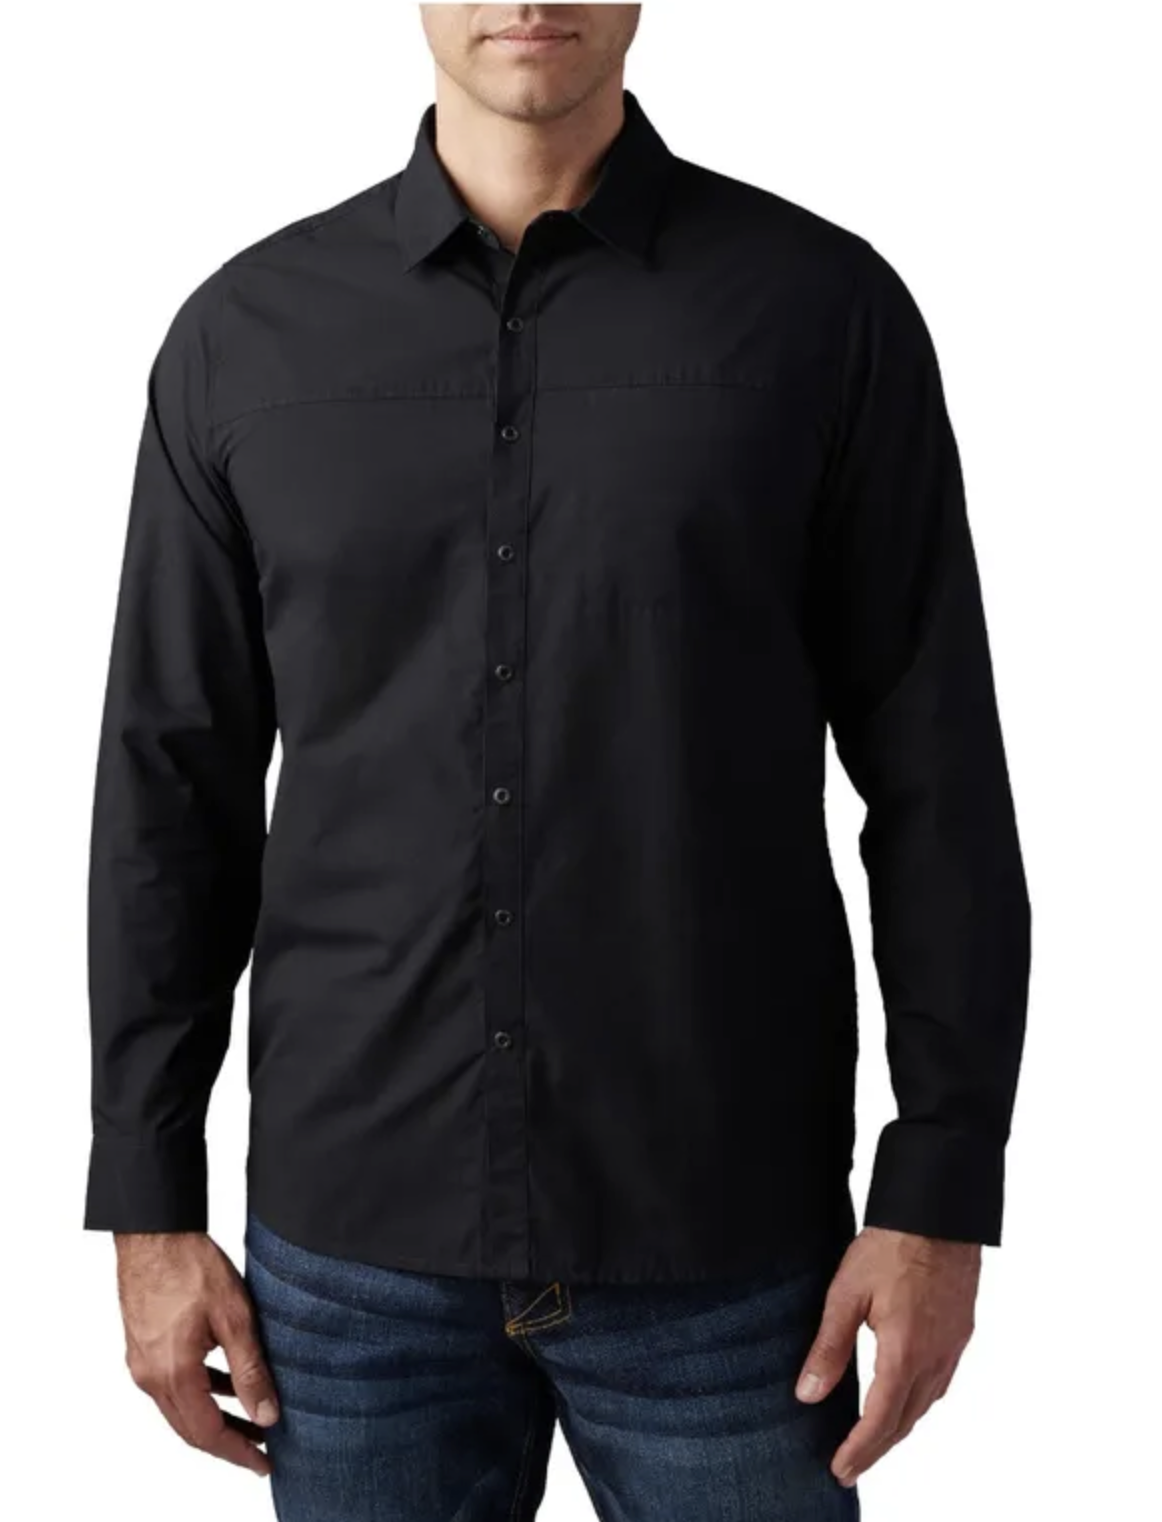 5.11 - Igor Solid Long Sleeve Shirt - Black (019)